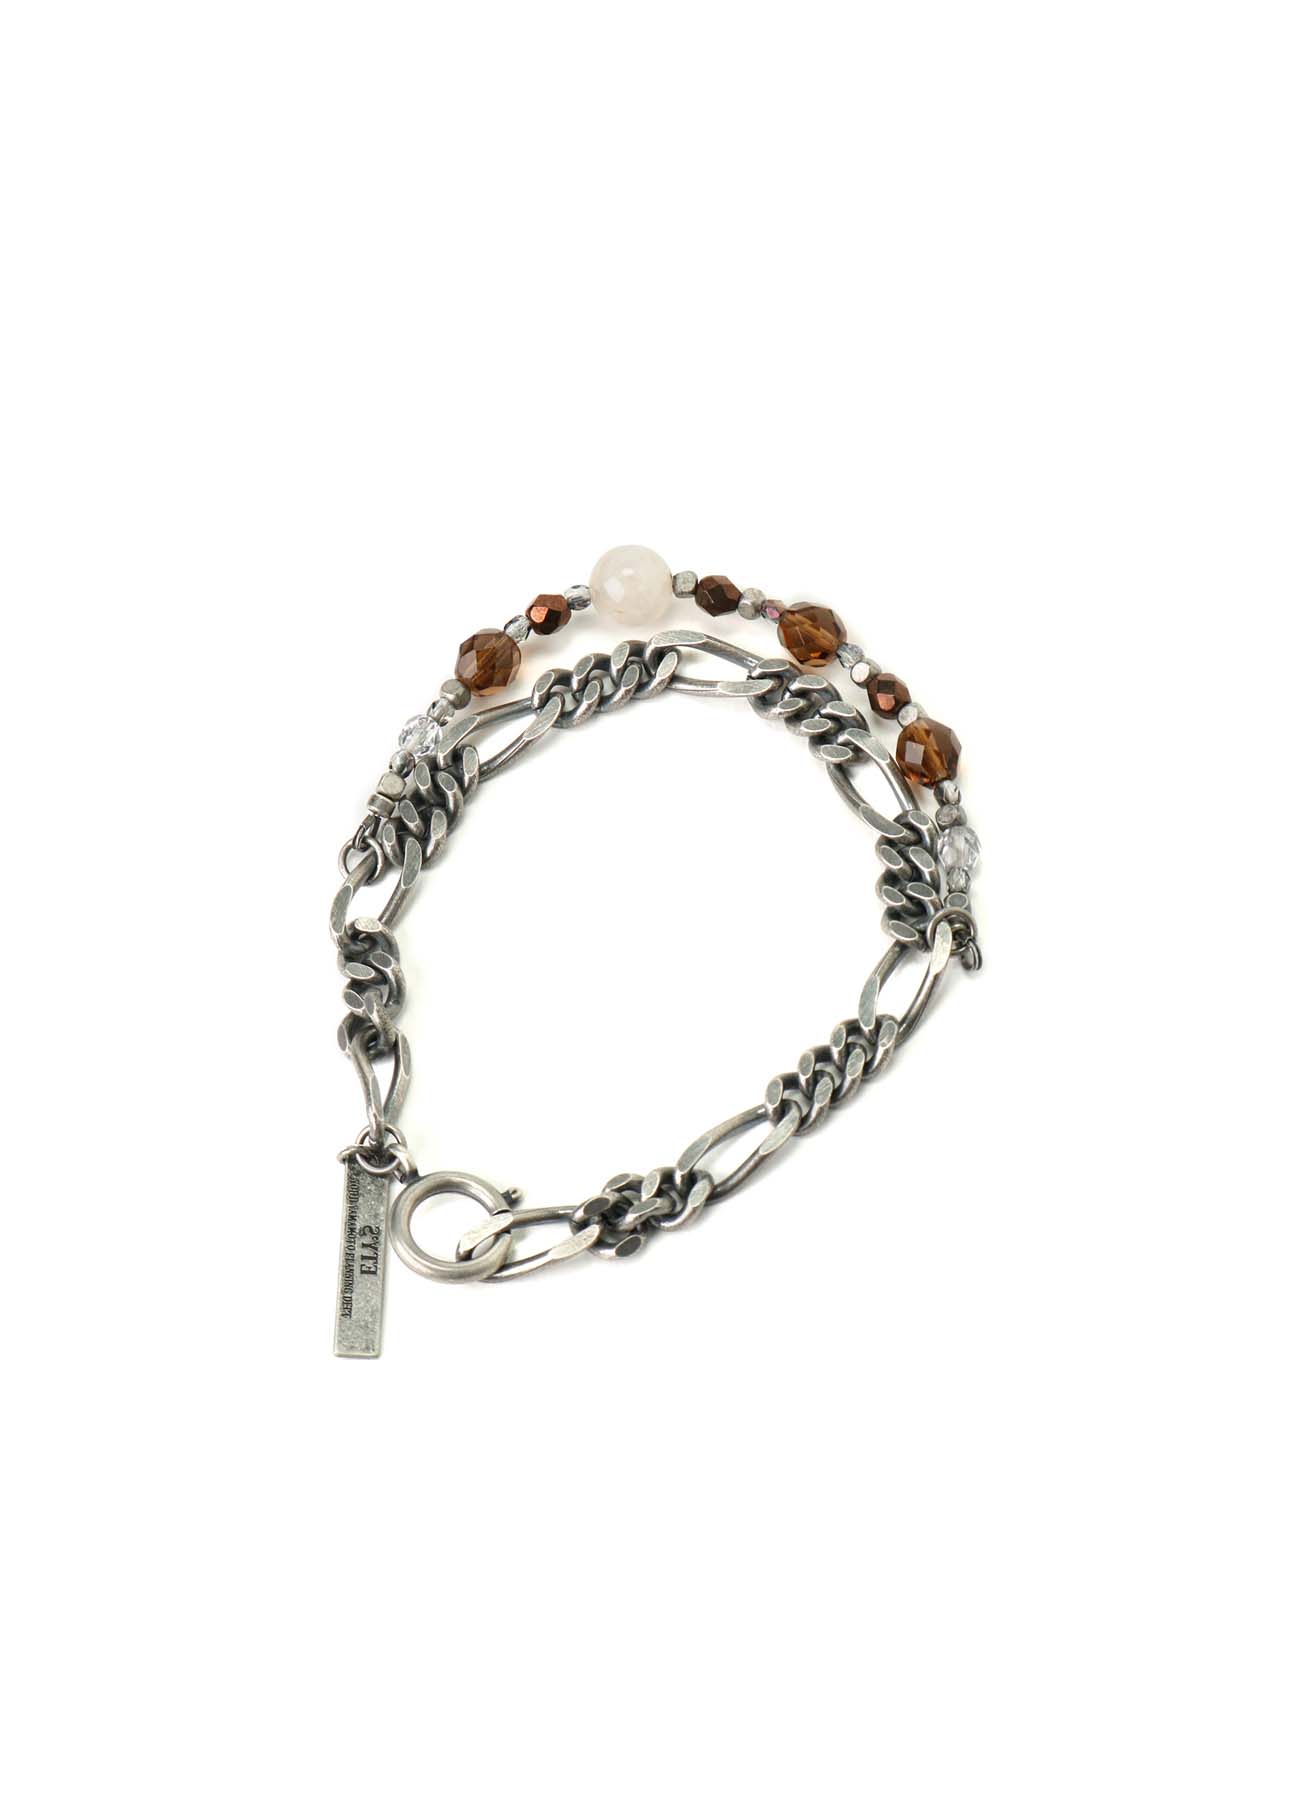 Rutile quartz + Glass Beads Brass Bracelet